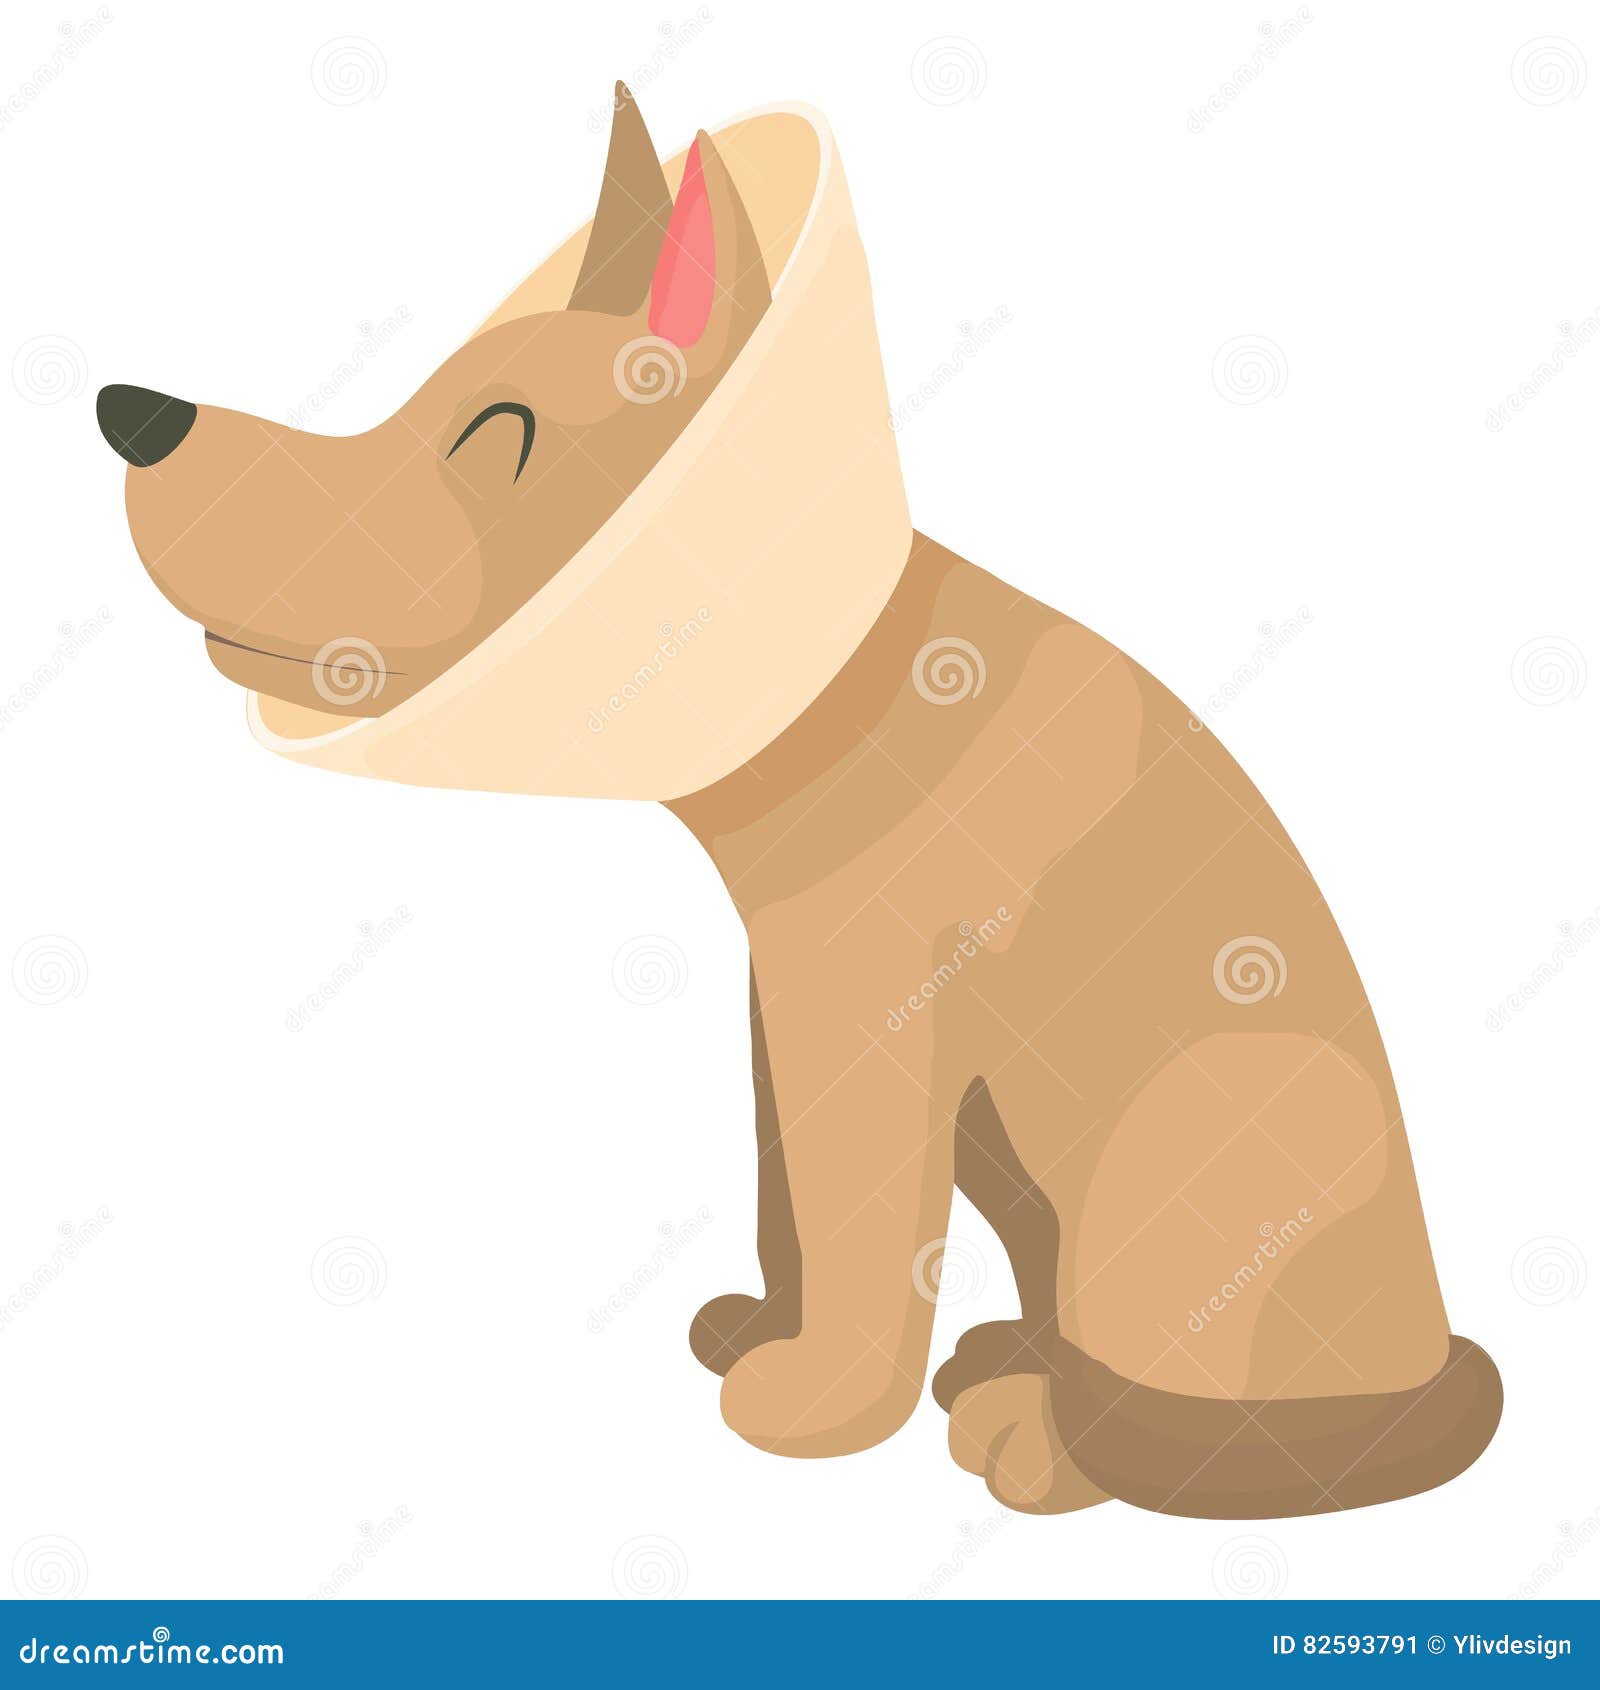 Sick Dog Icon, Cartoon Style Stock Vector - Illustration of object